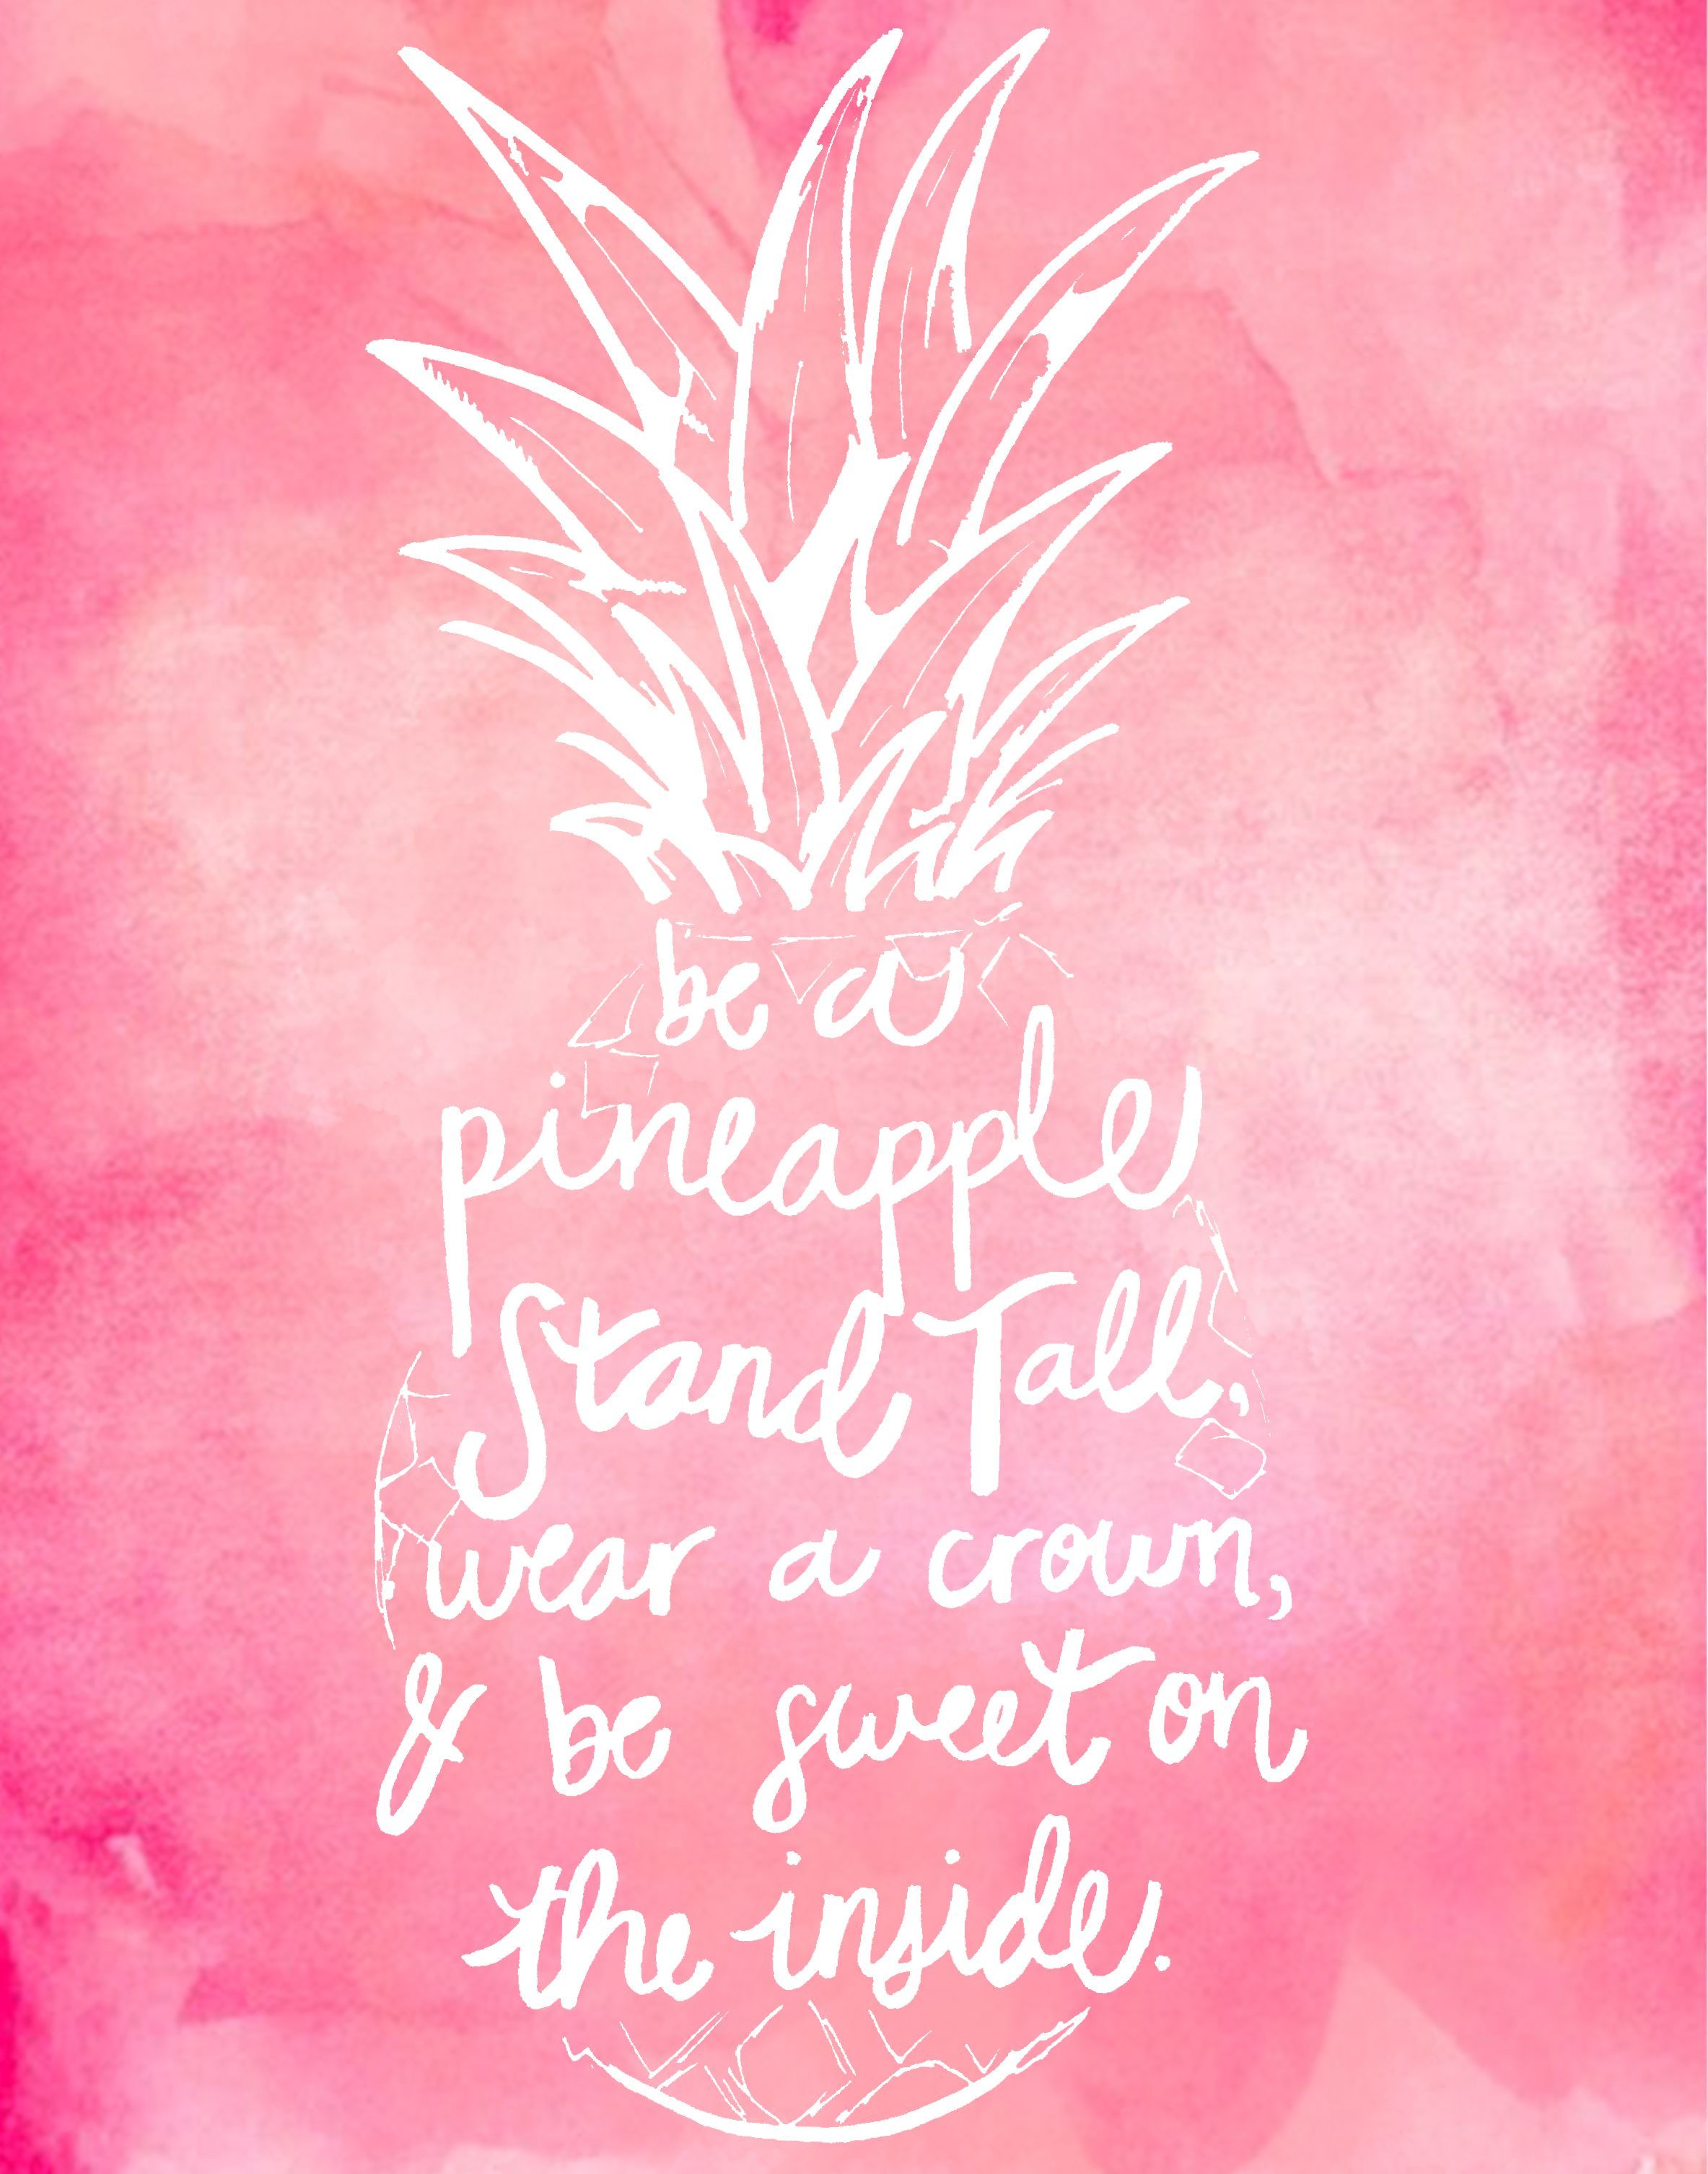 Always be a pineapple. #altardstate #standoutforgood. Pineapple